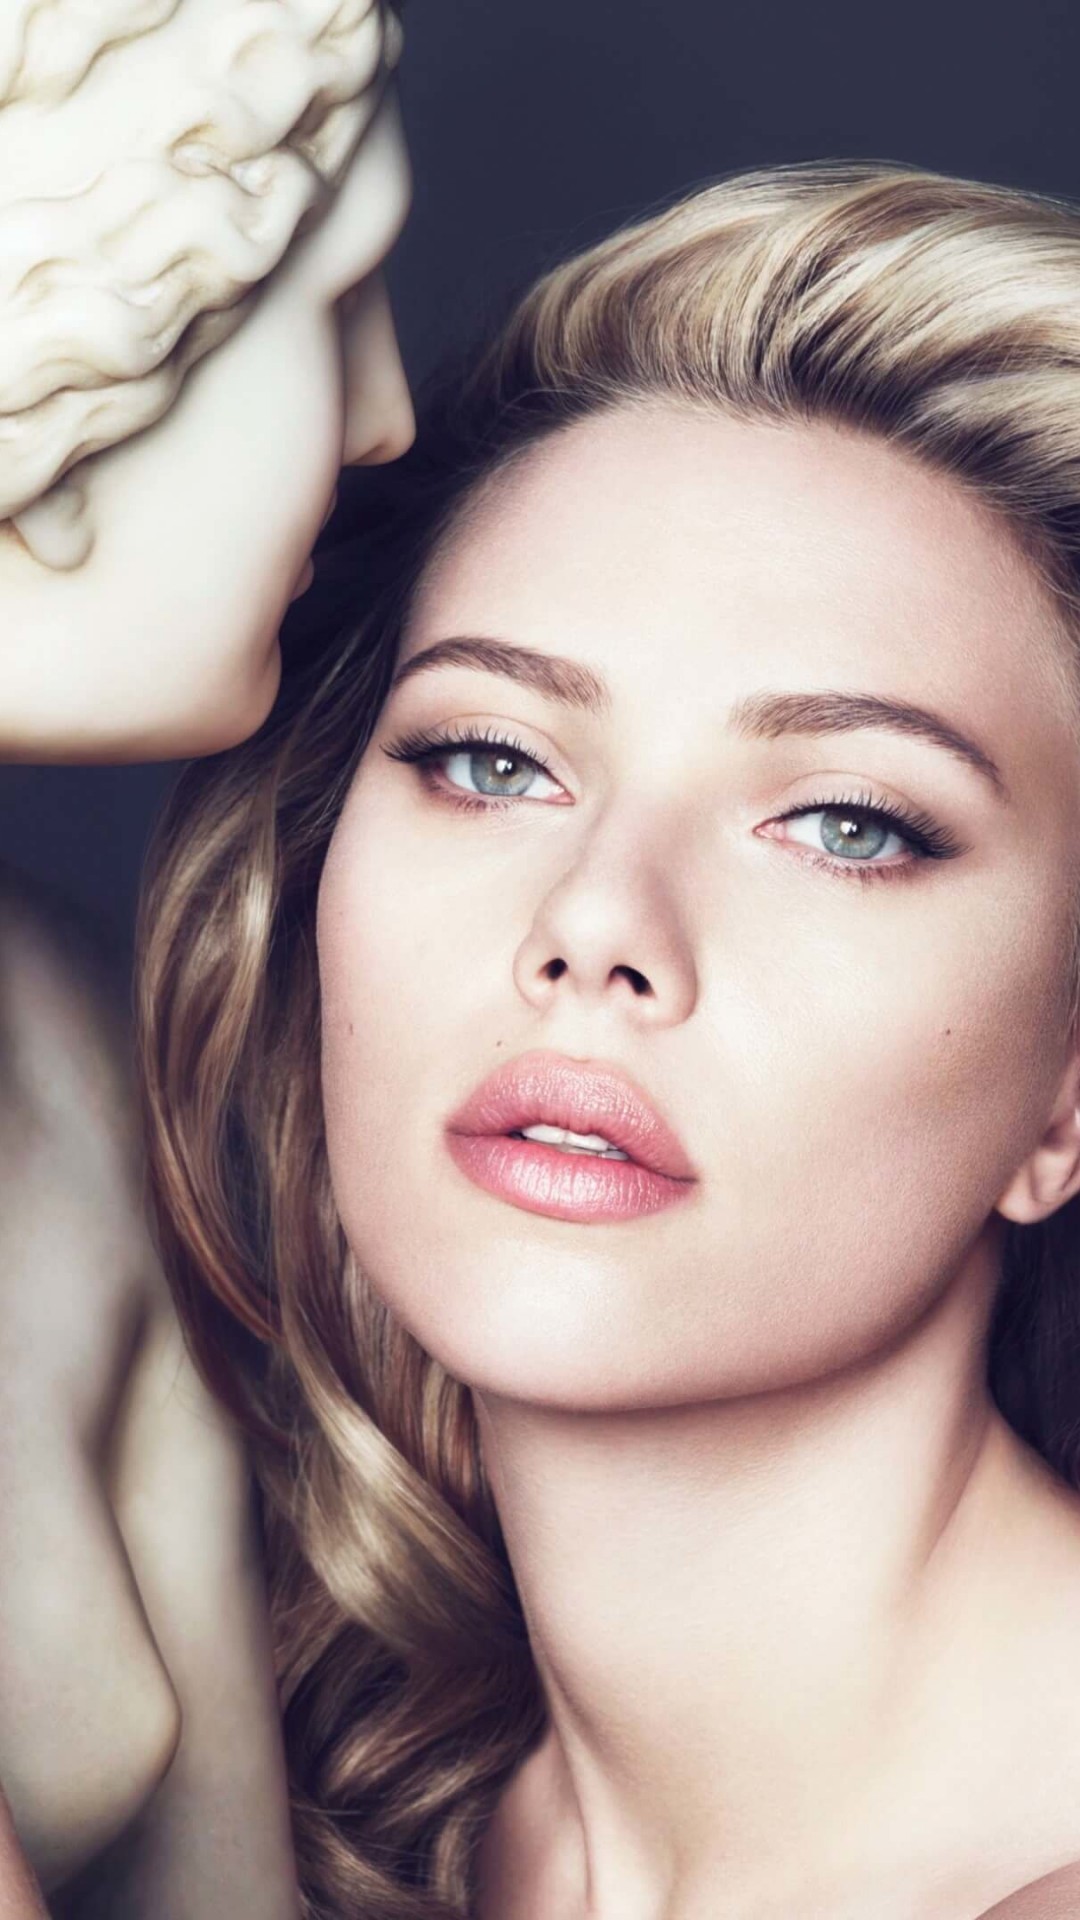 Scarlett Johansson in Dolce & Gabbana Advert Wallpaper for Google Nexus 5